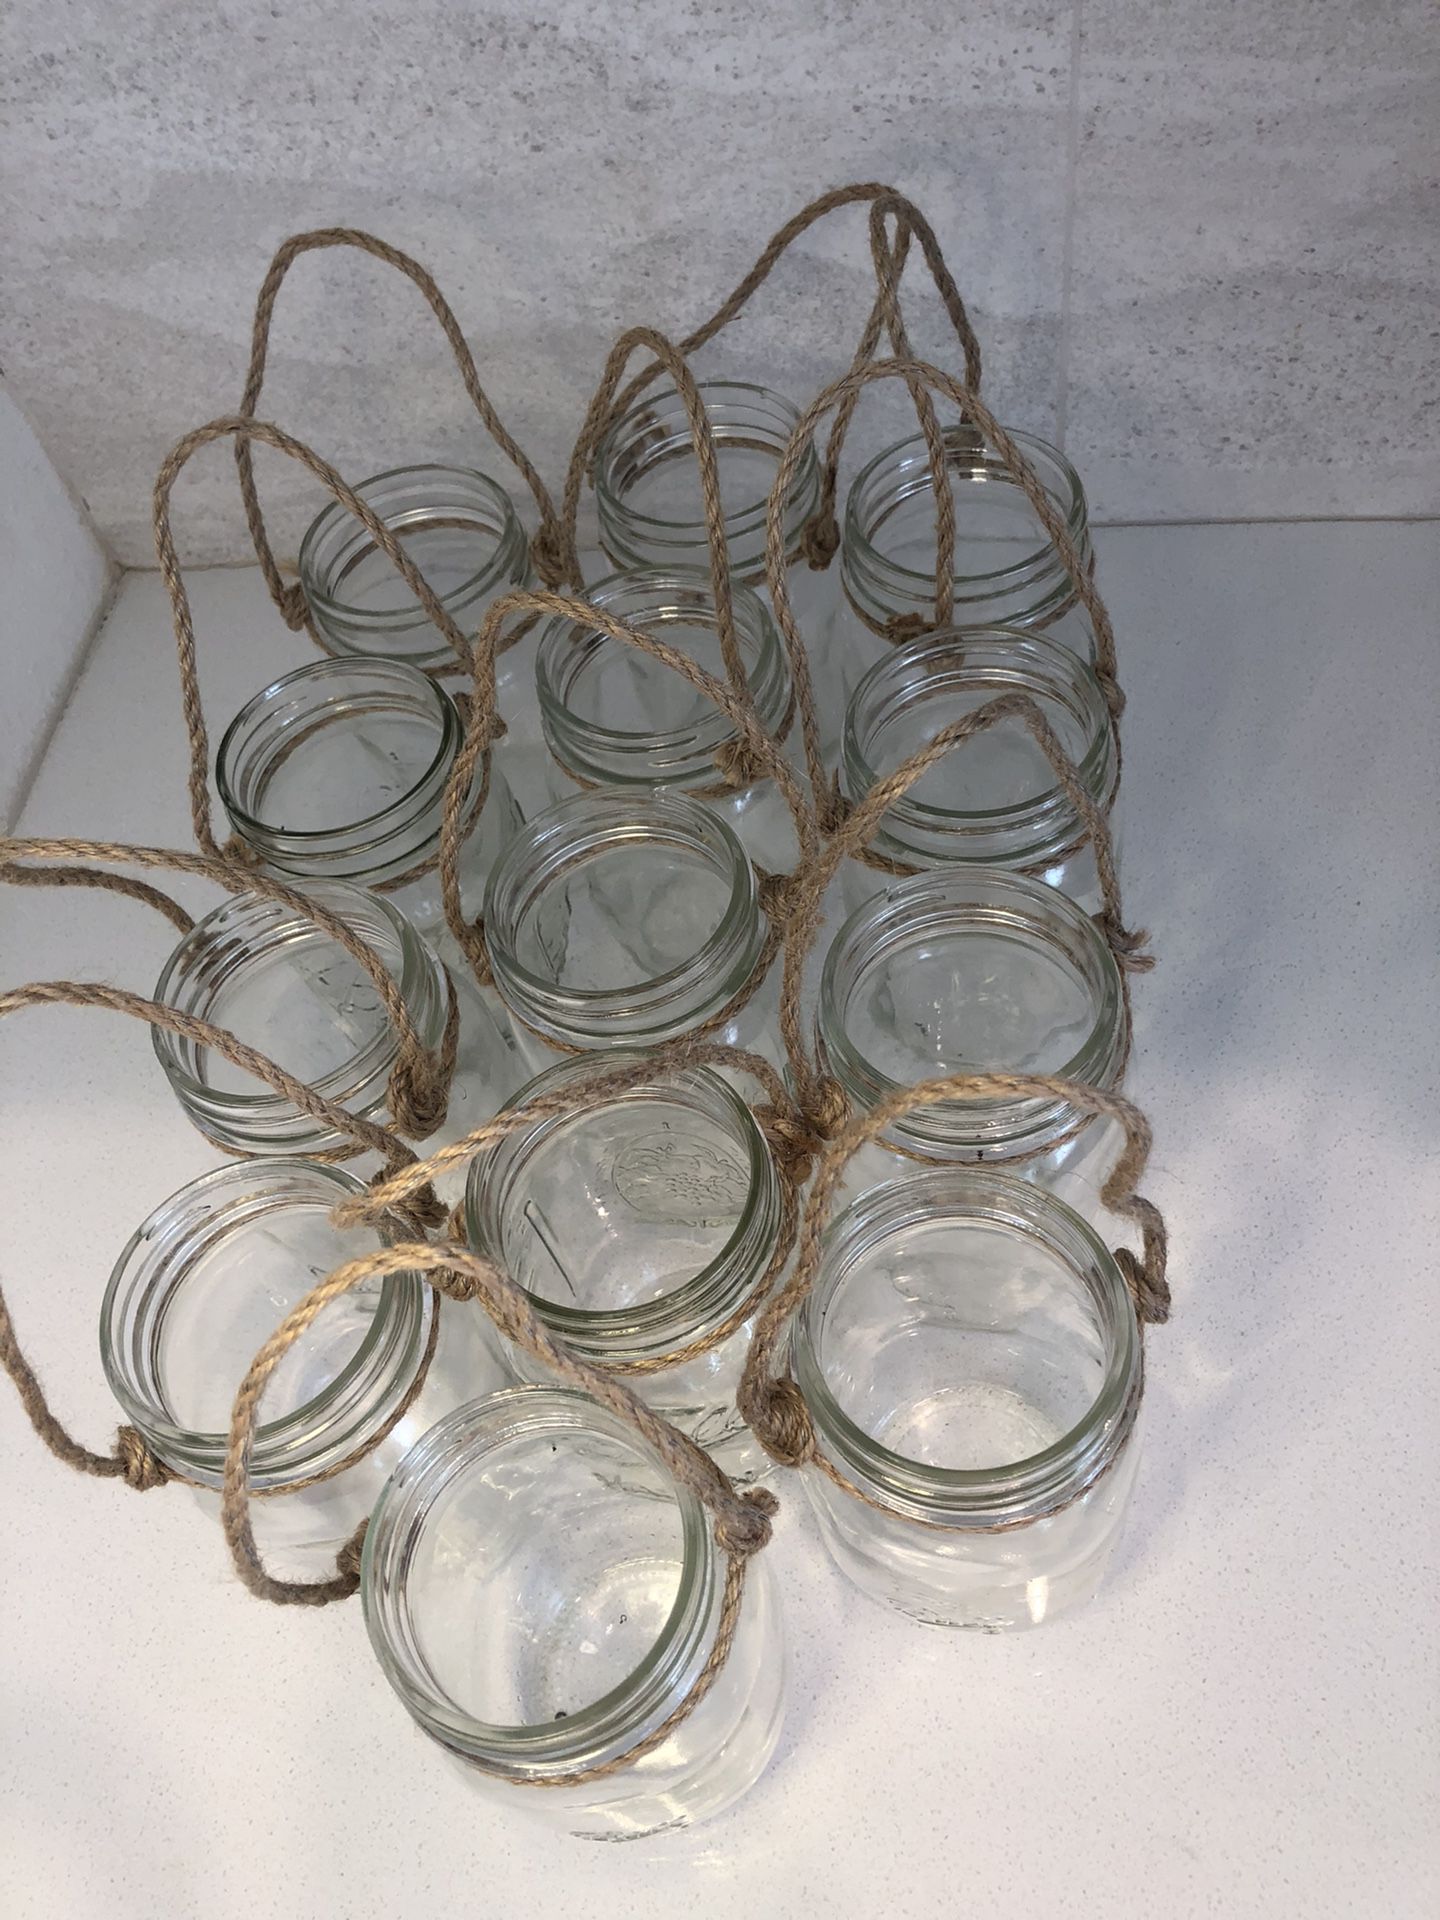 13 Ball Mason jars for party lights